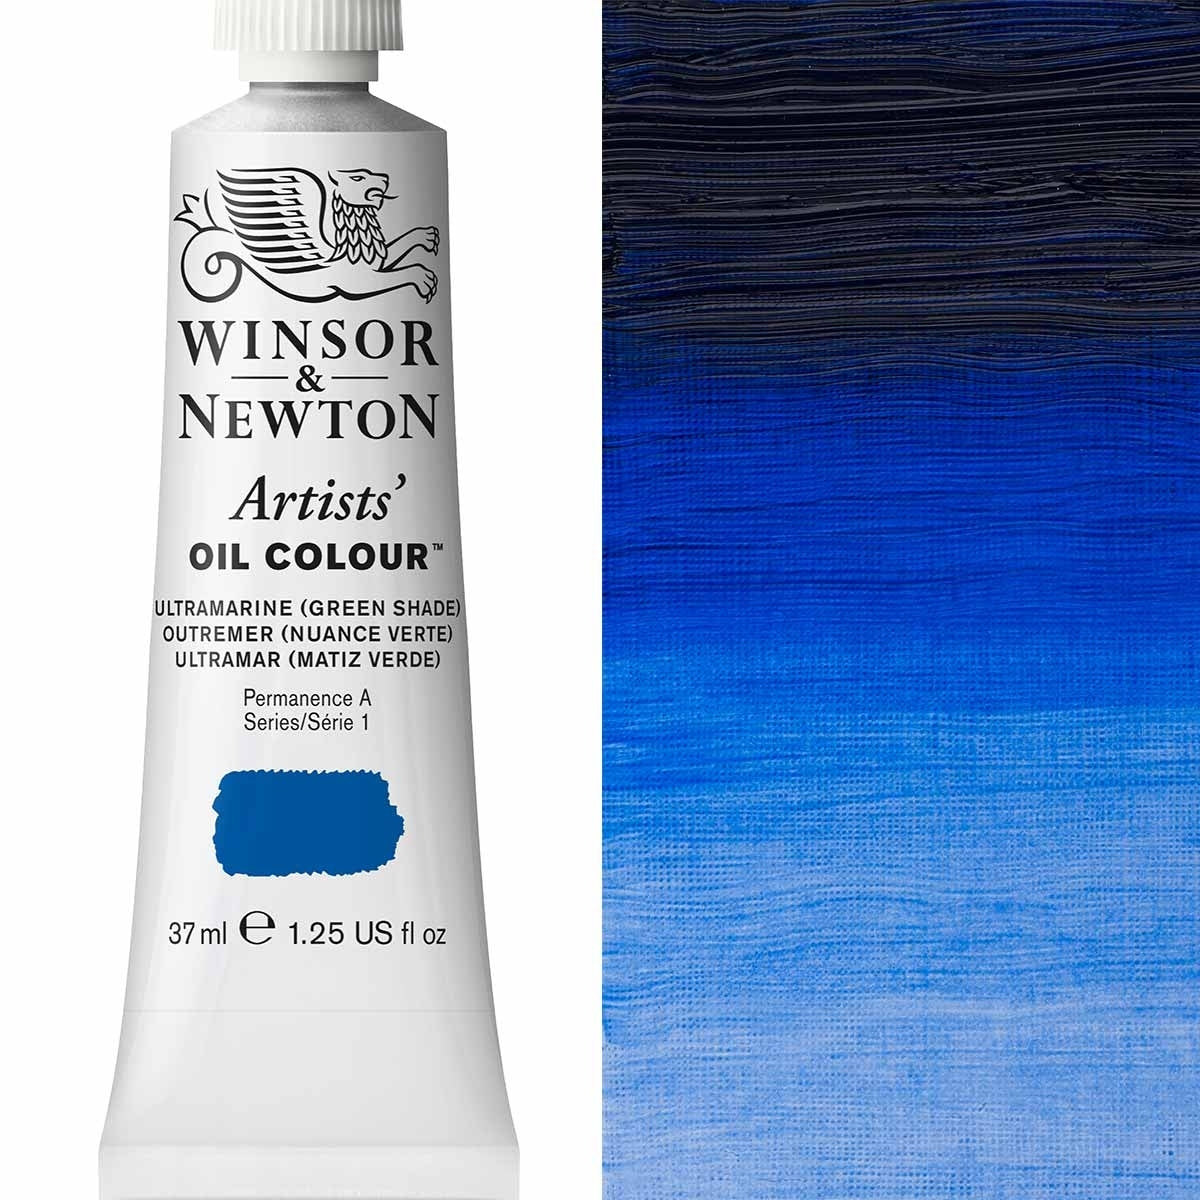 Winsor and Newton - Artists' Oil Colour - 37ml - Ultramarine Green Shade